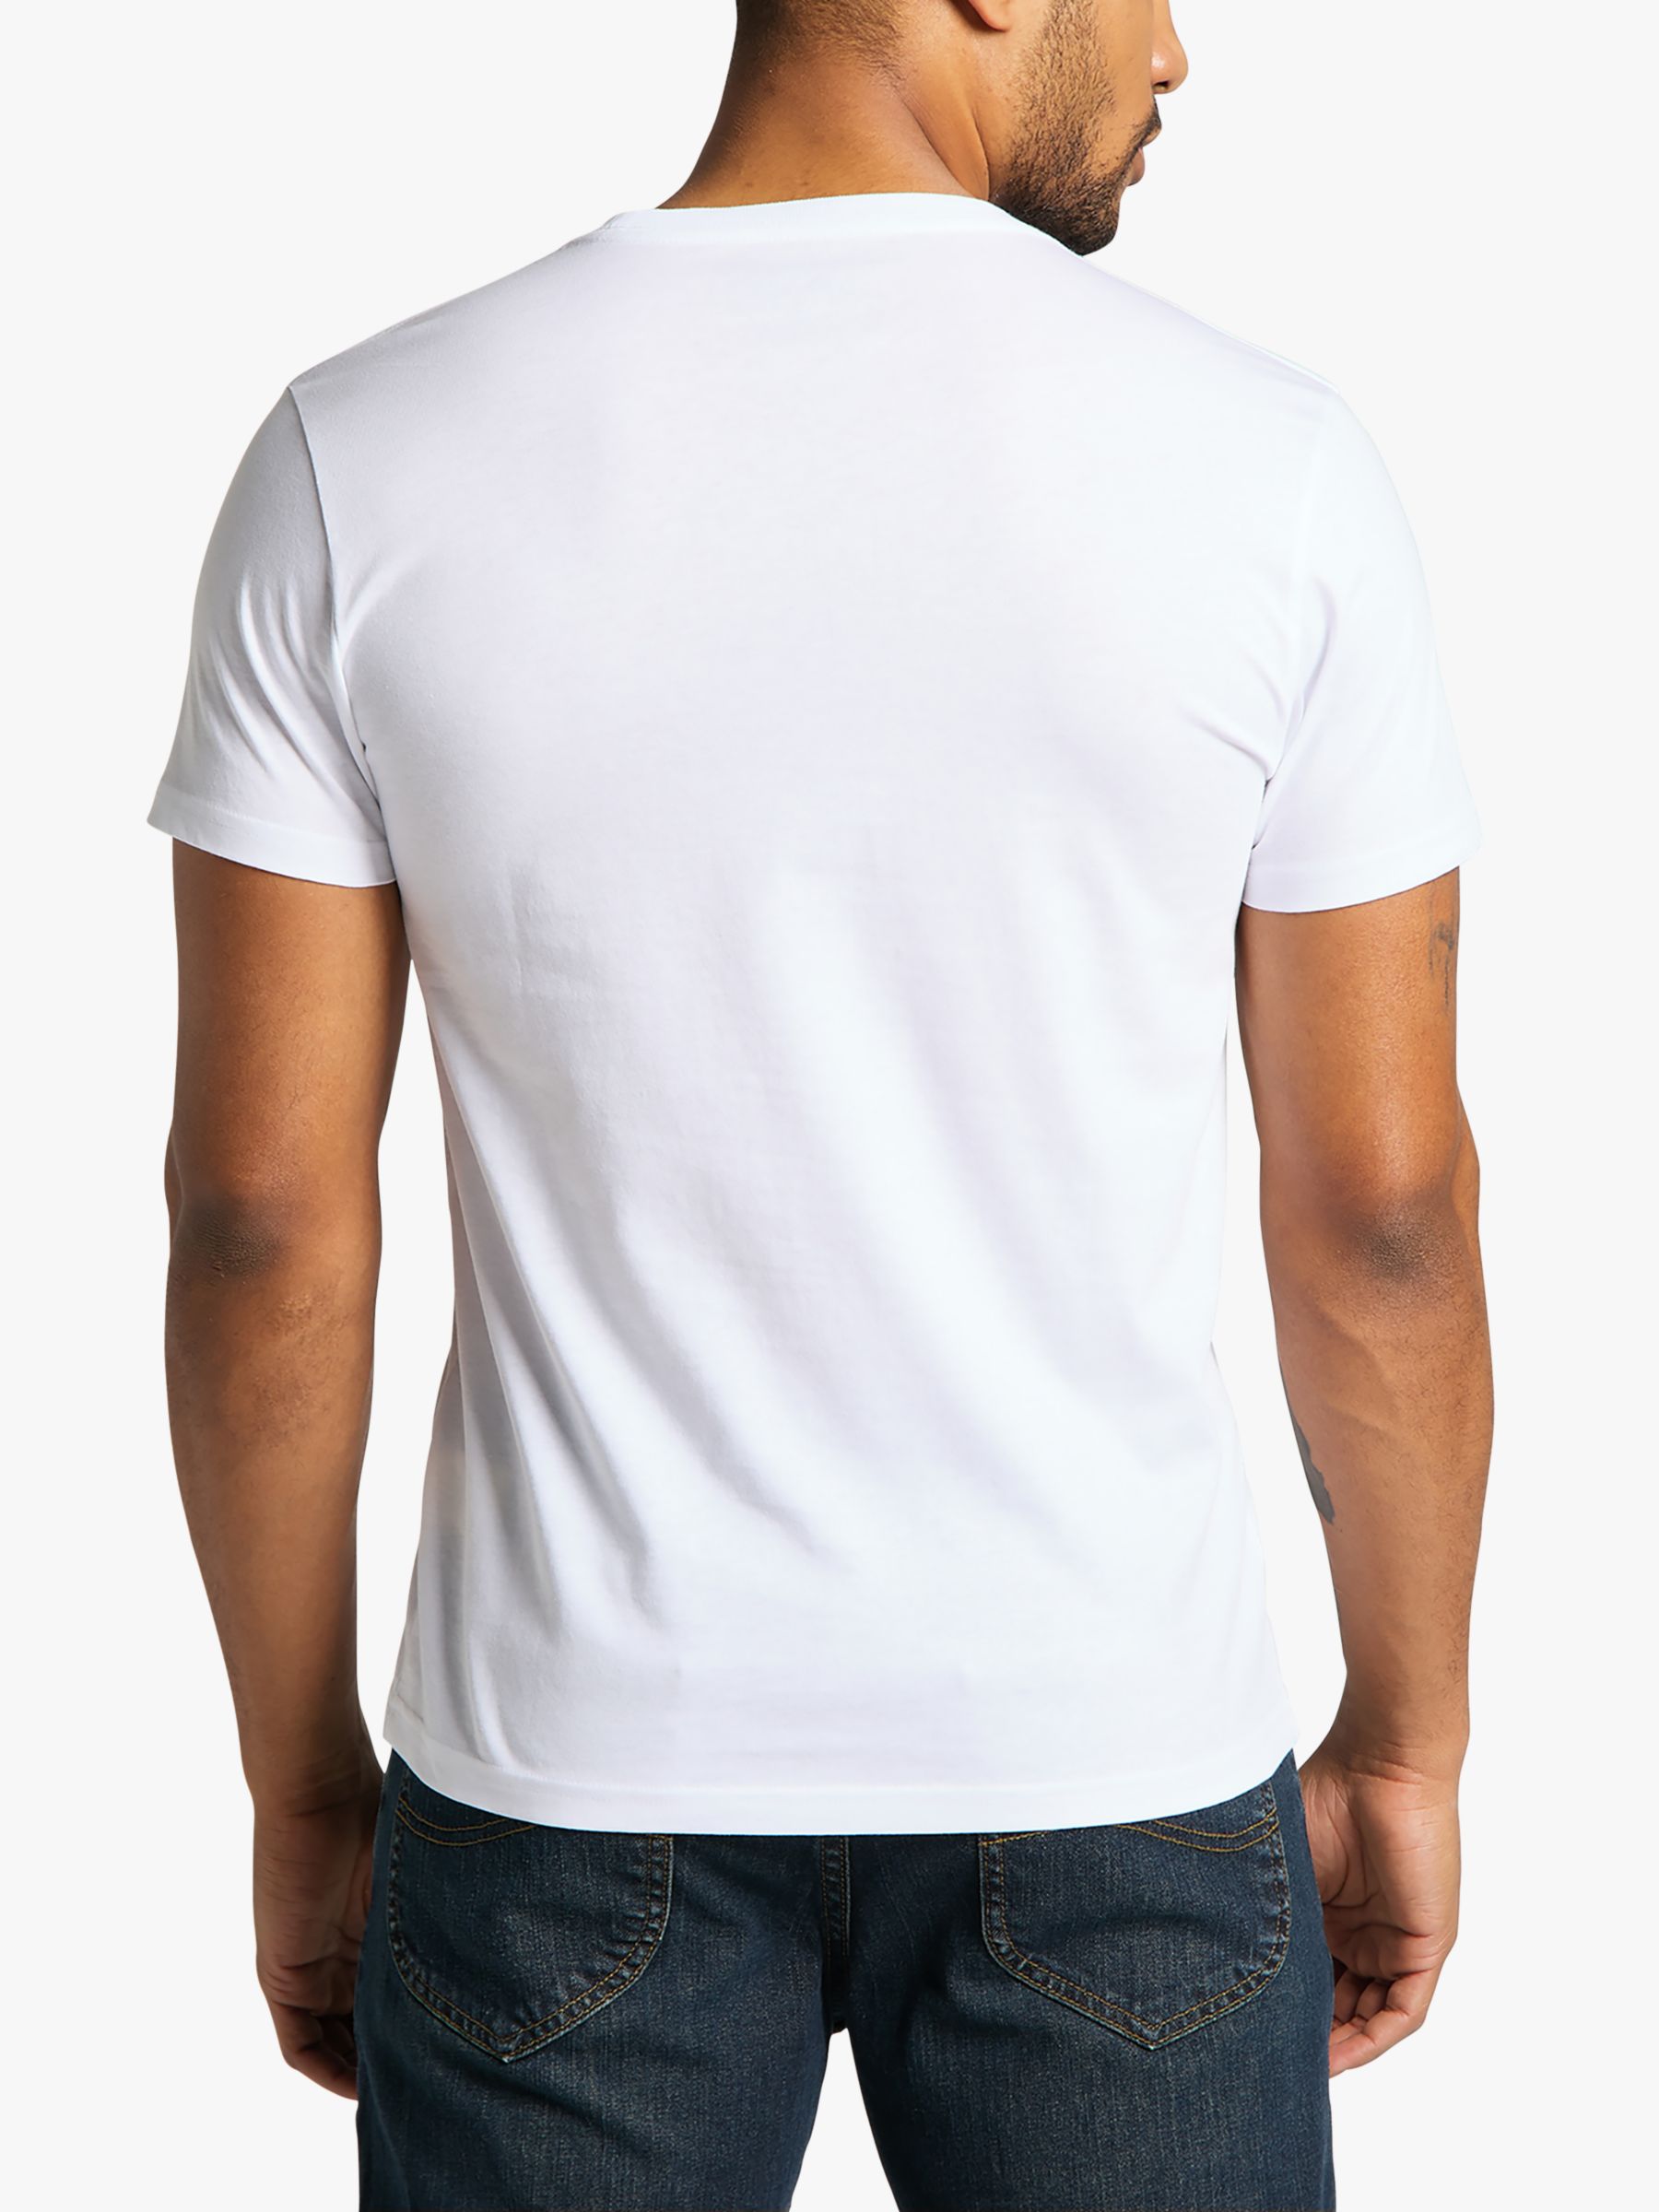 Lee Regular Fit Cotton T-Shirt, Pack of 2, Black/White, S